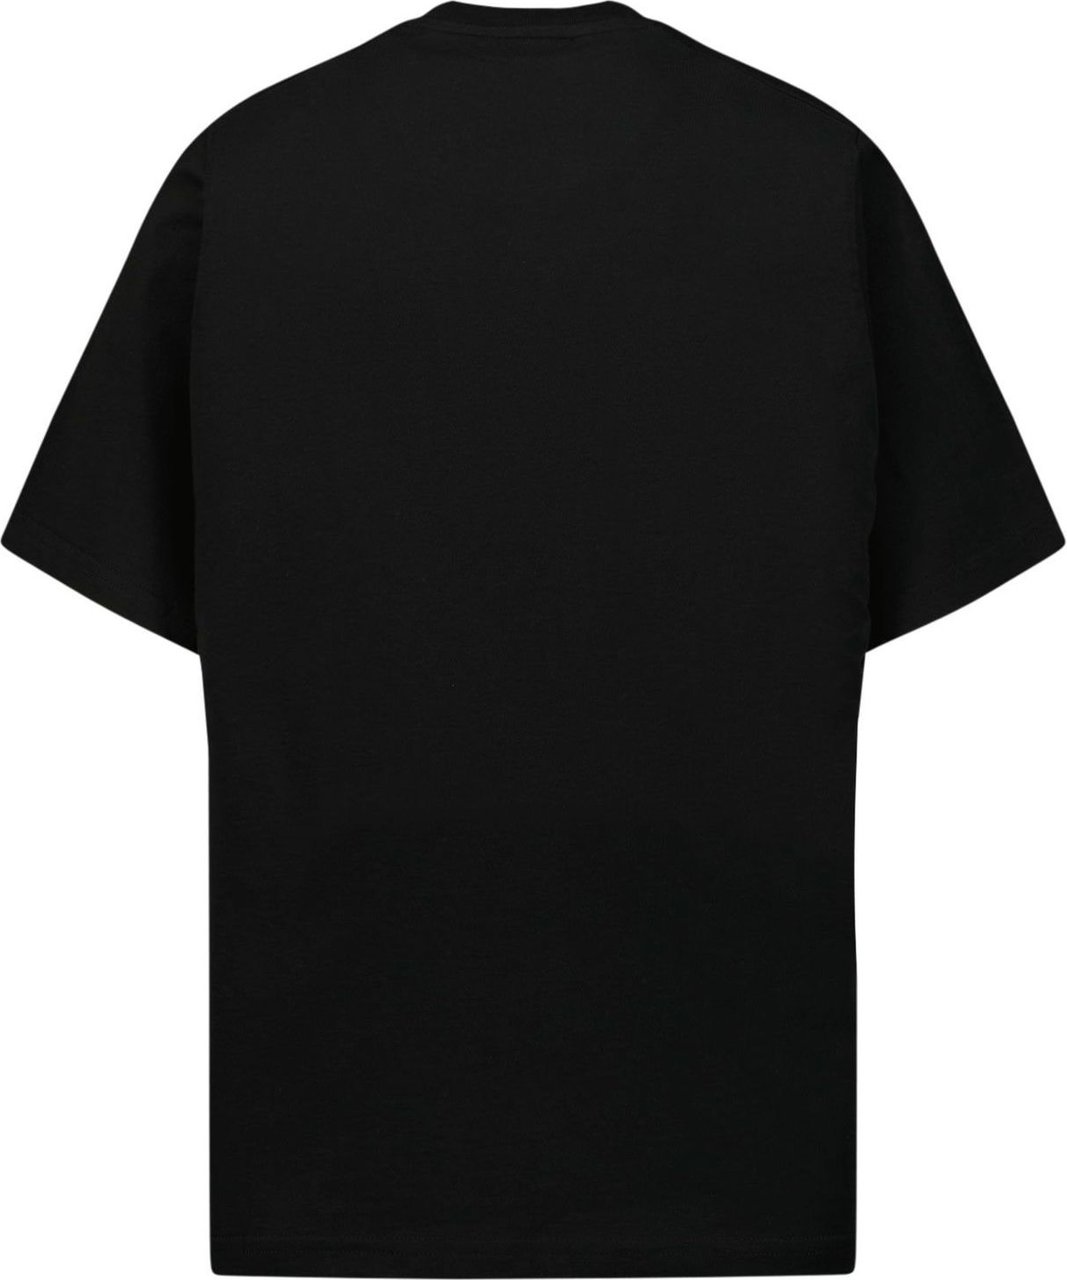 Dsquared2 Dsquared2 DQ1228 kinder t-shirt zwart Zwart